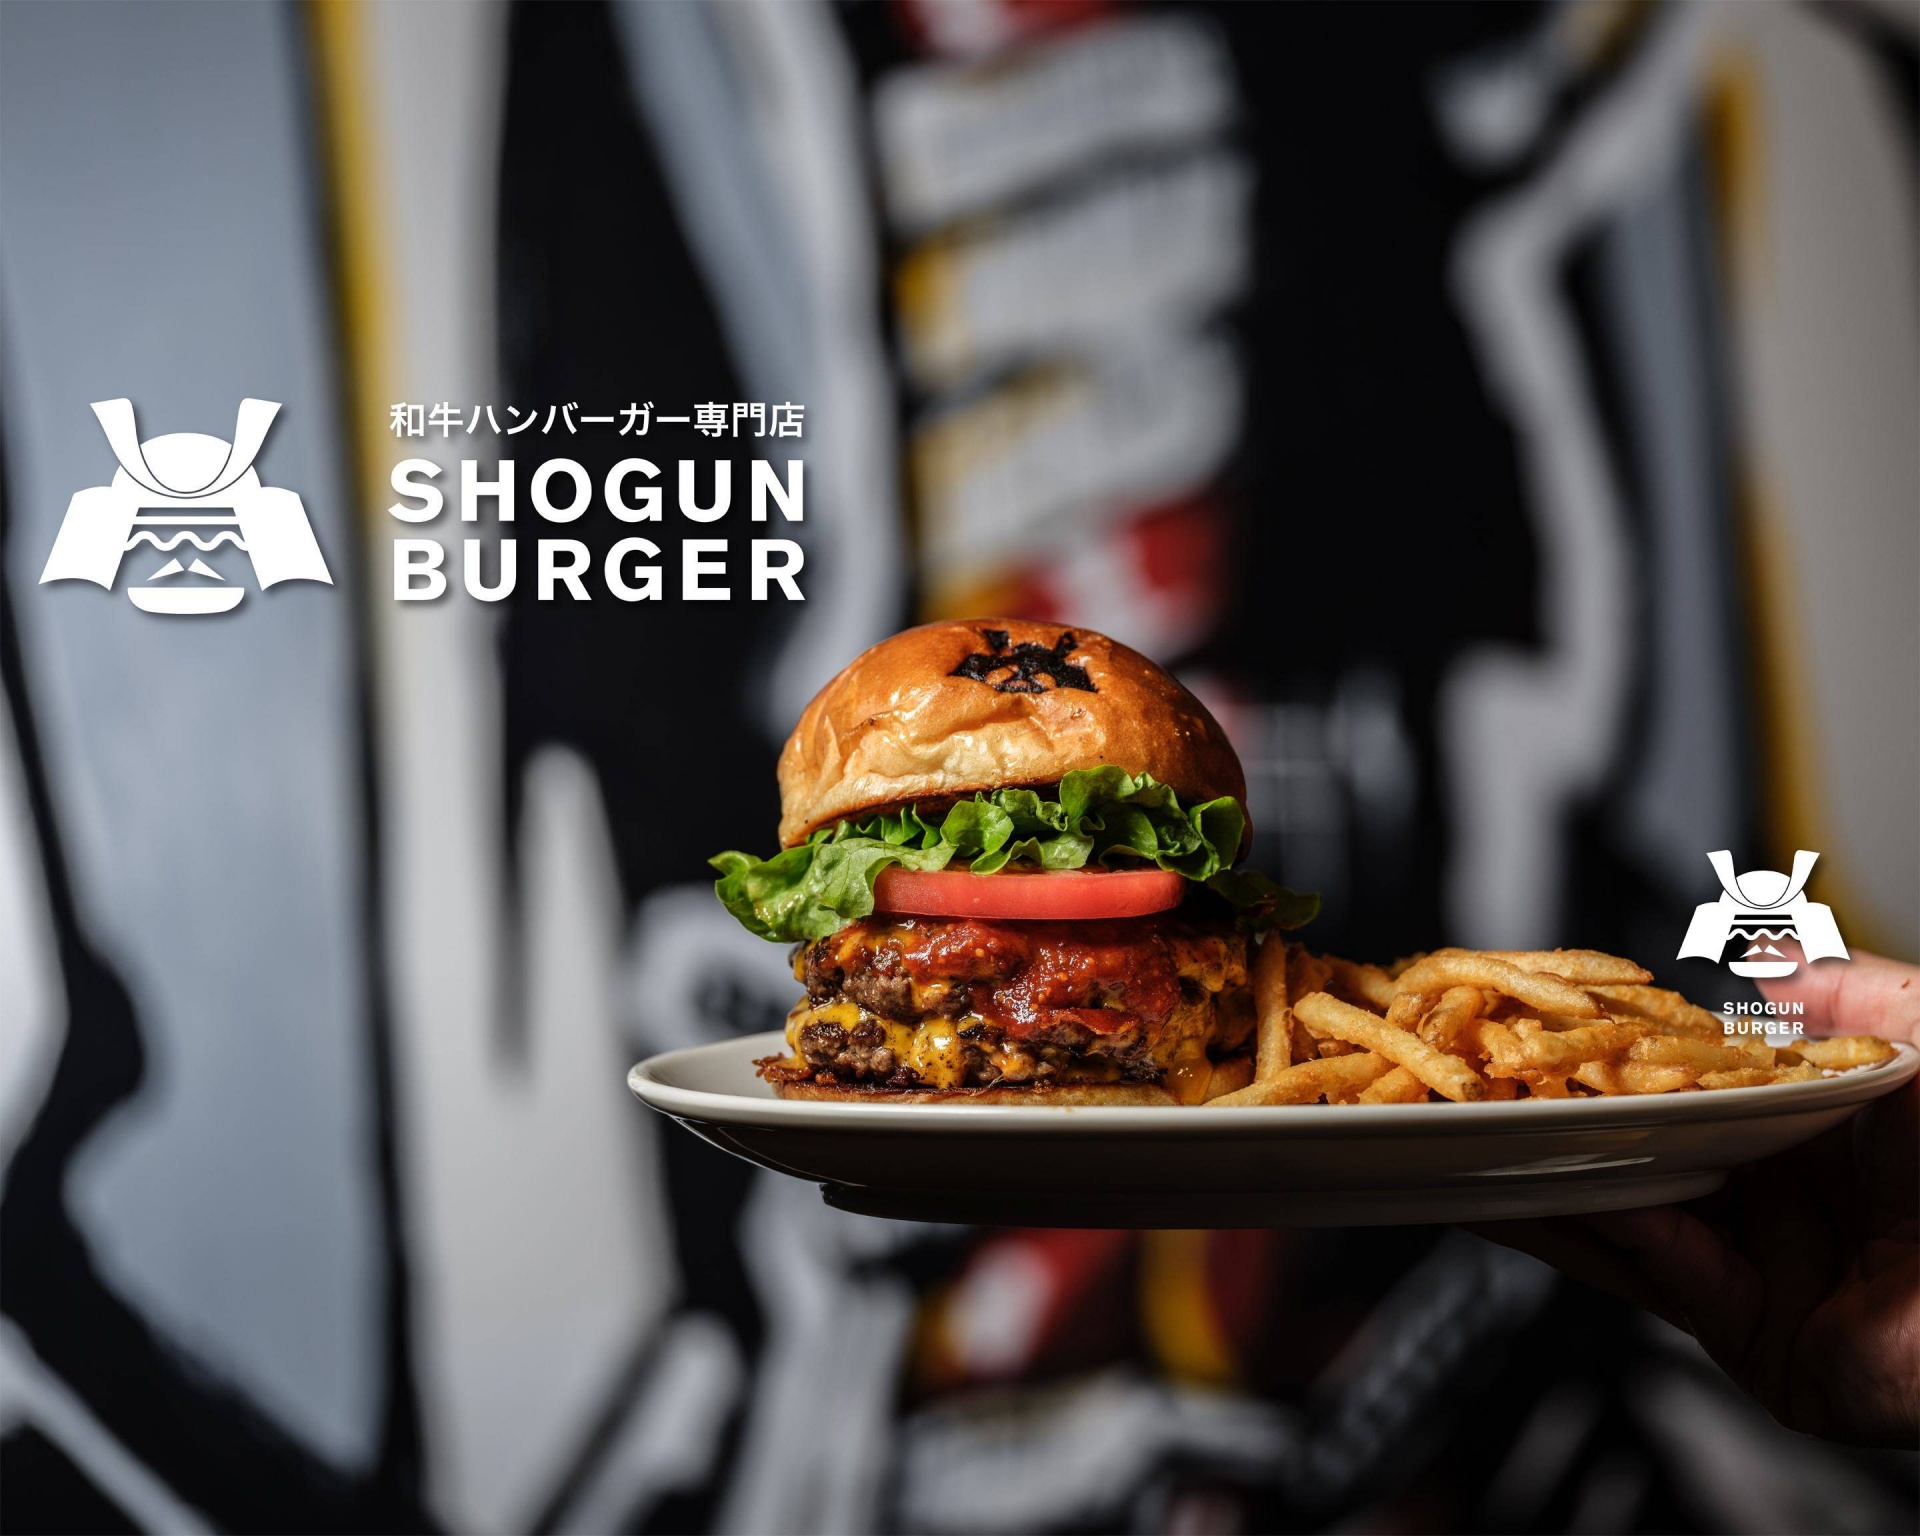 Japanese burger chain Shogun Burger opens its first outlet in Vietnam